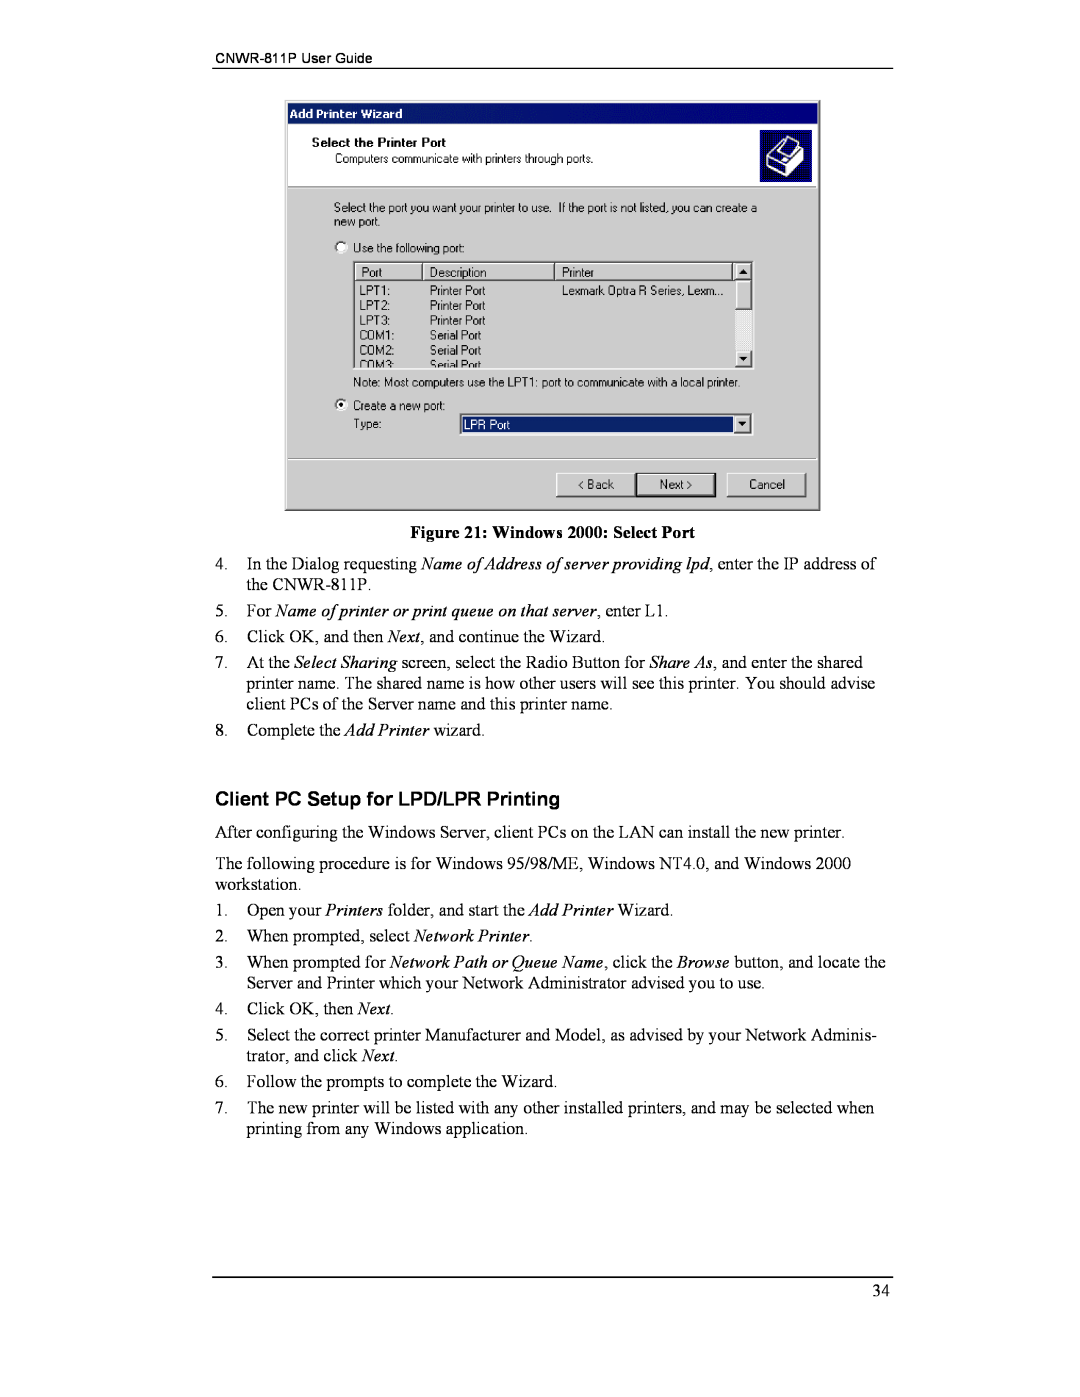 CNET CNWR-811P manual Client PC Setup for LPD/LPR Printing, Windows 2000 Select Port 